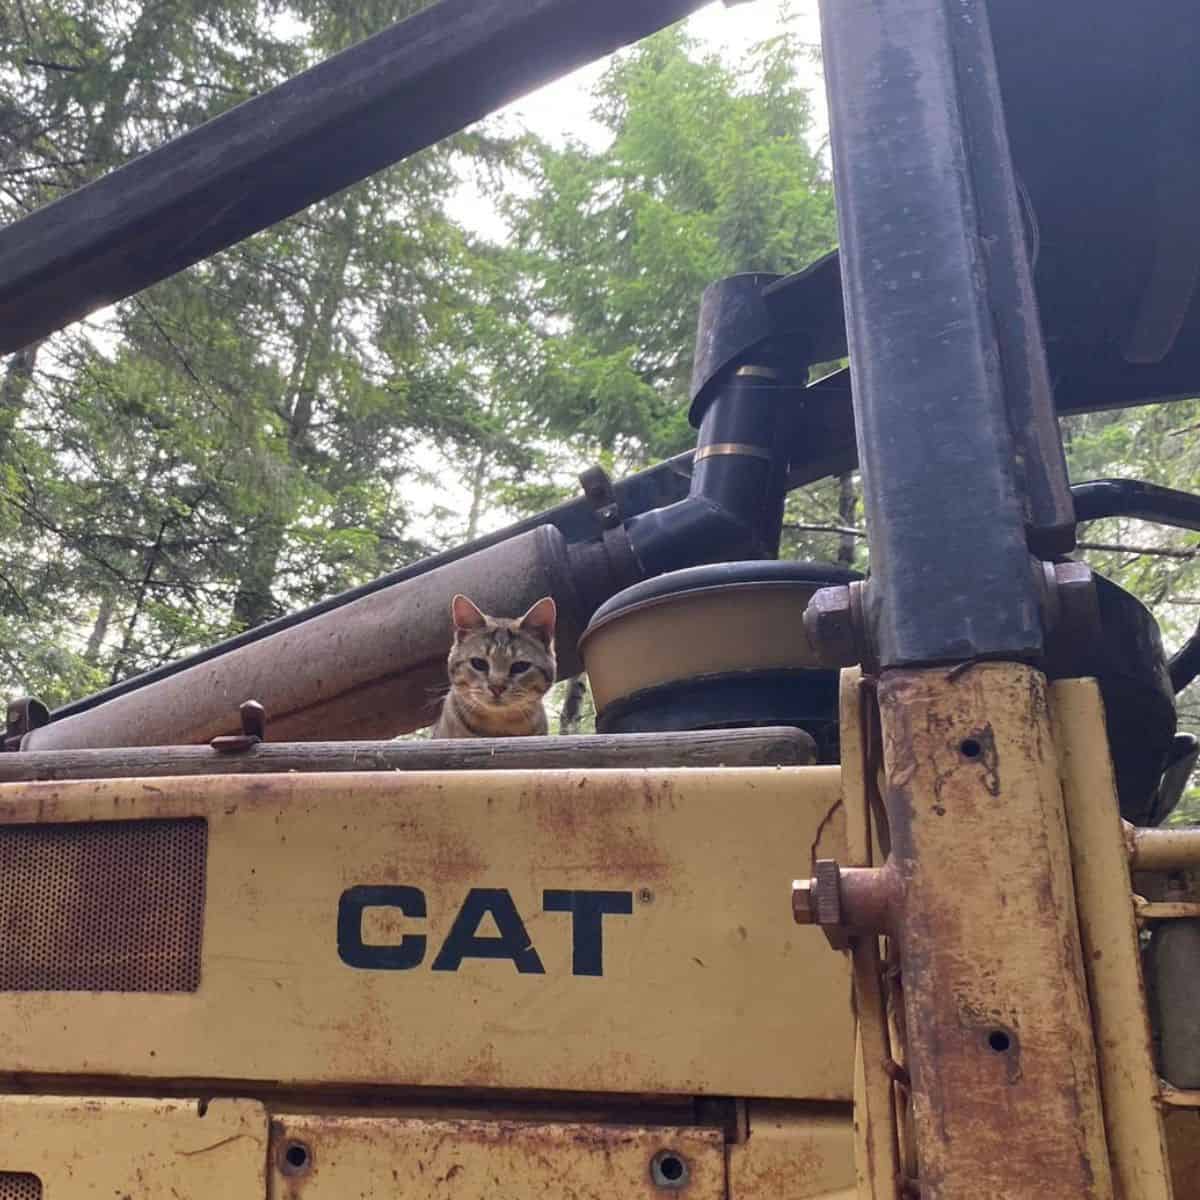 cat sits on the big machine wheels